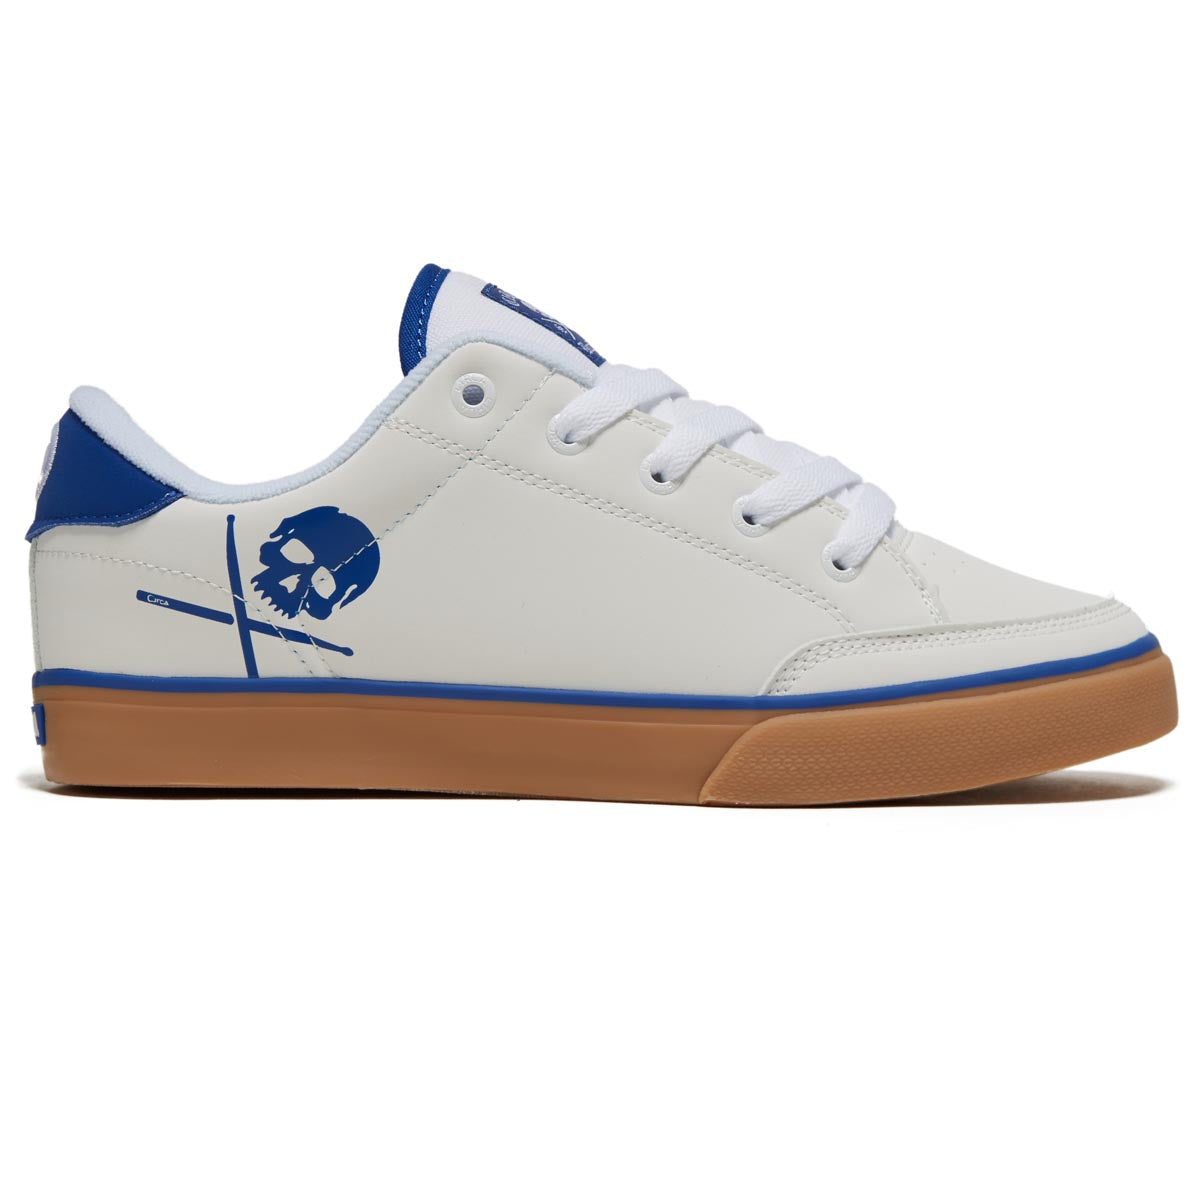 C1rca Buckler SK Shoes - White/Royal Blue image 1